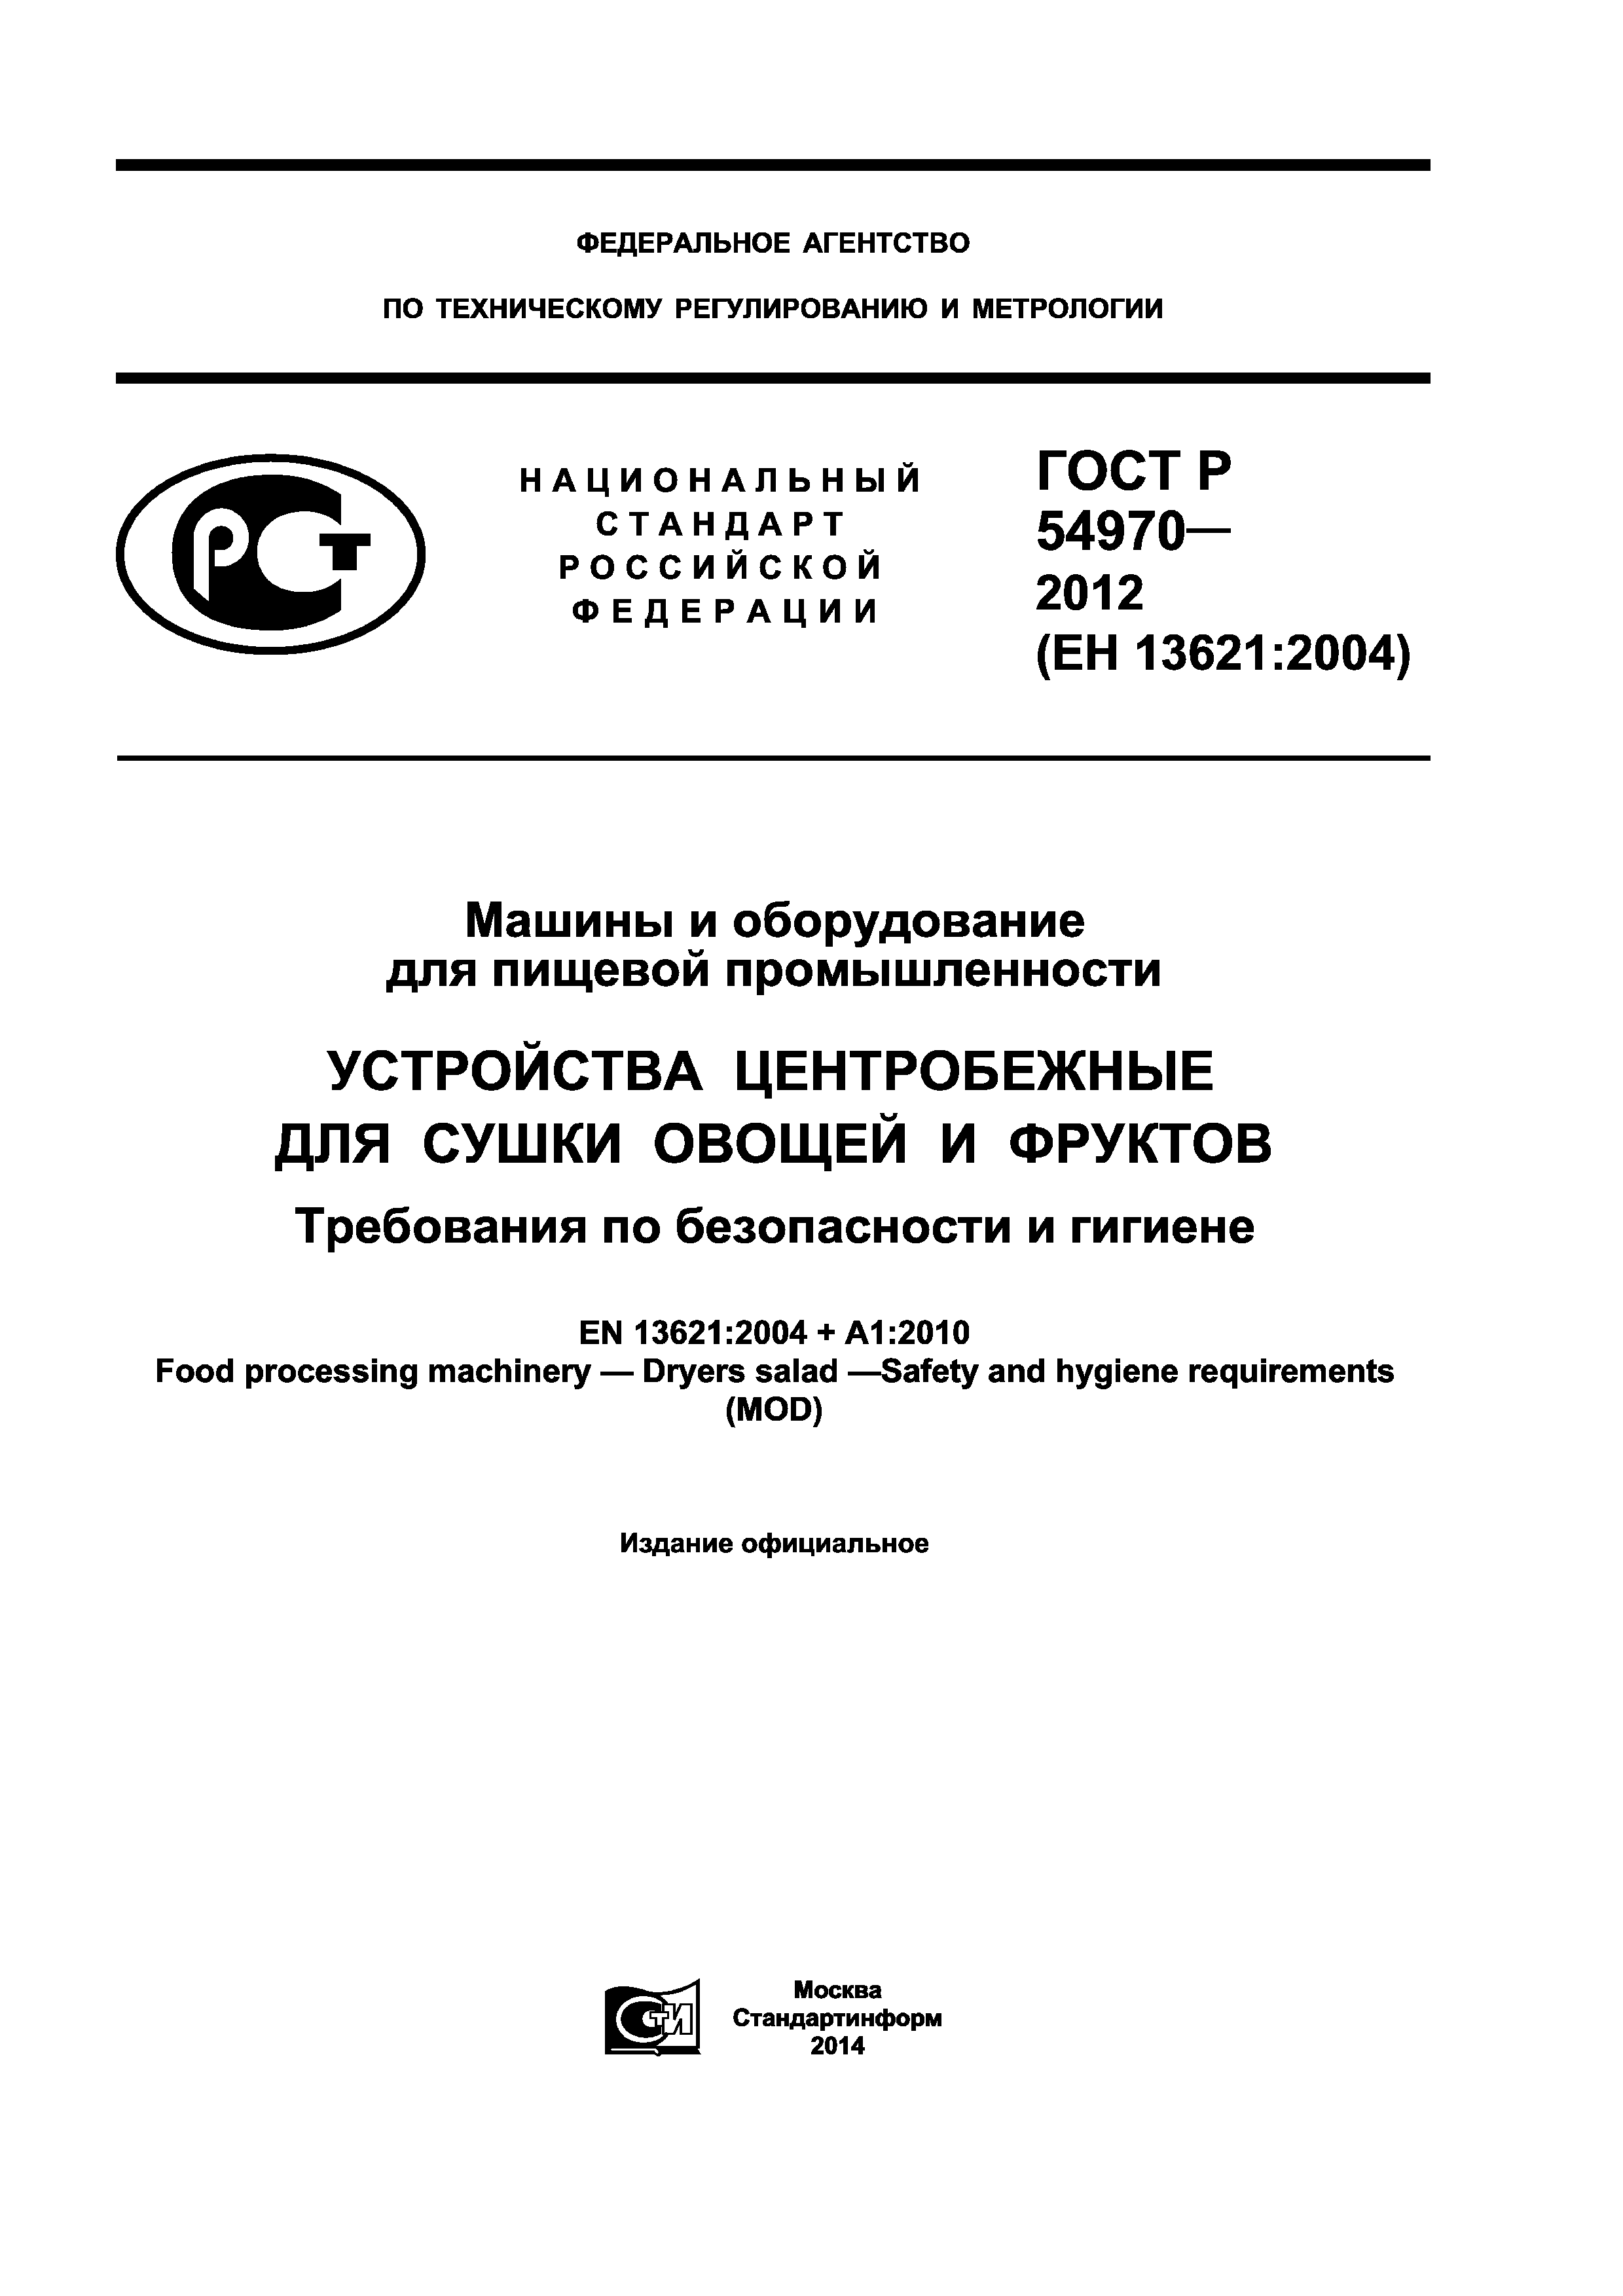 ГОСТ Р 54970-2012